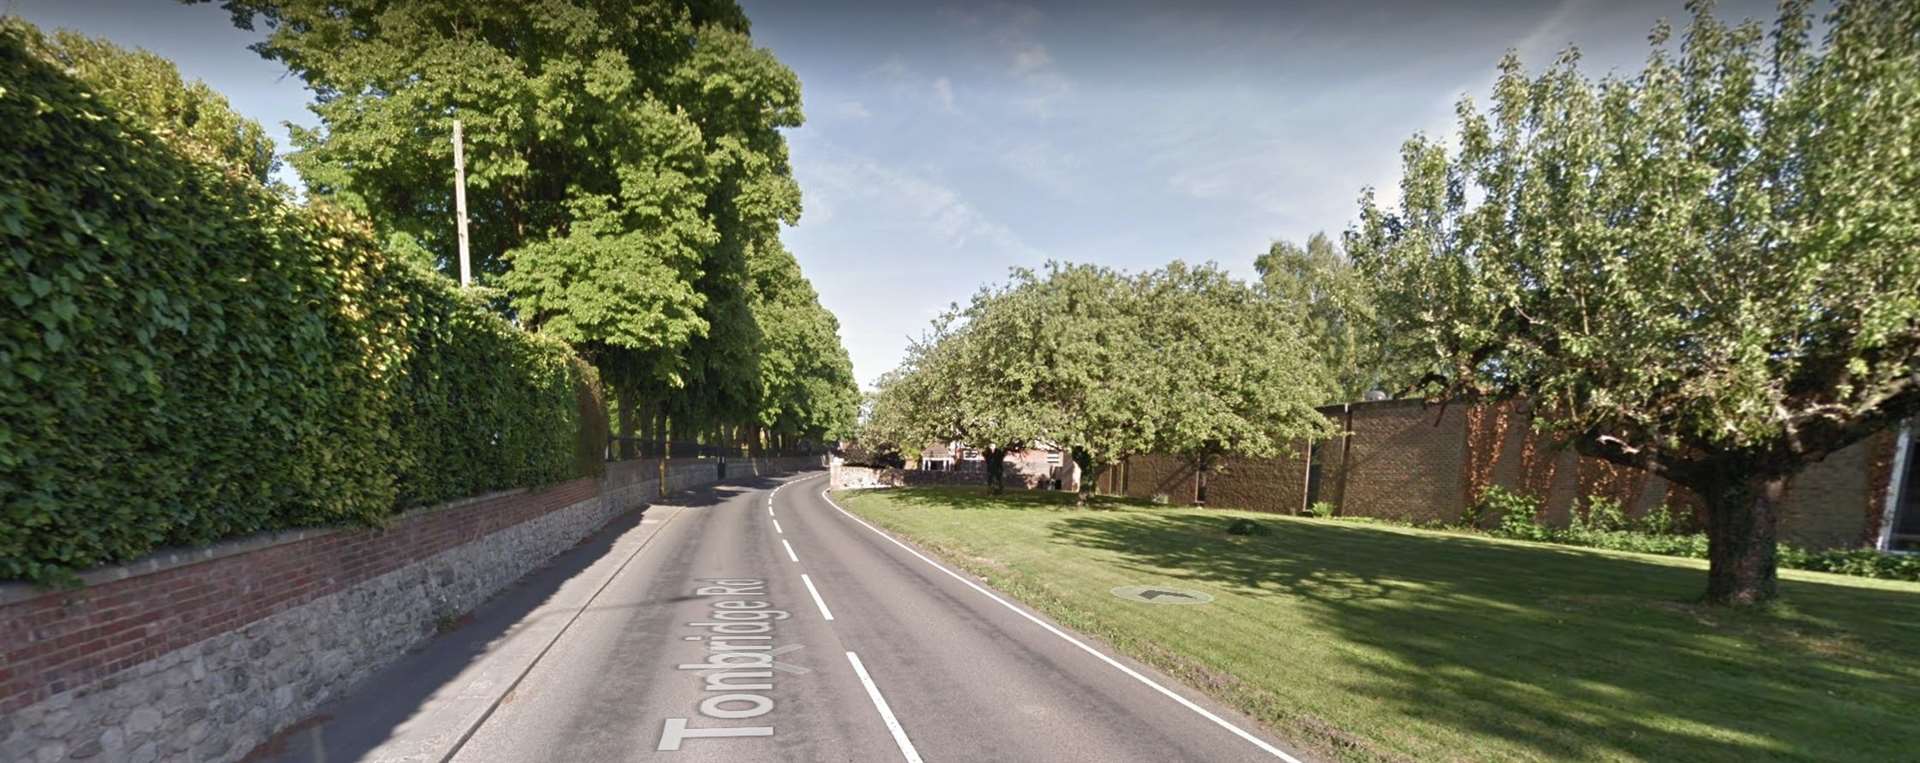 Tonbridge Road, Maidstone. Picture: Google Street View